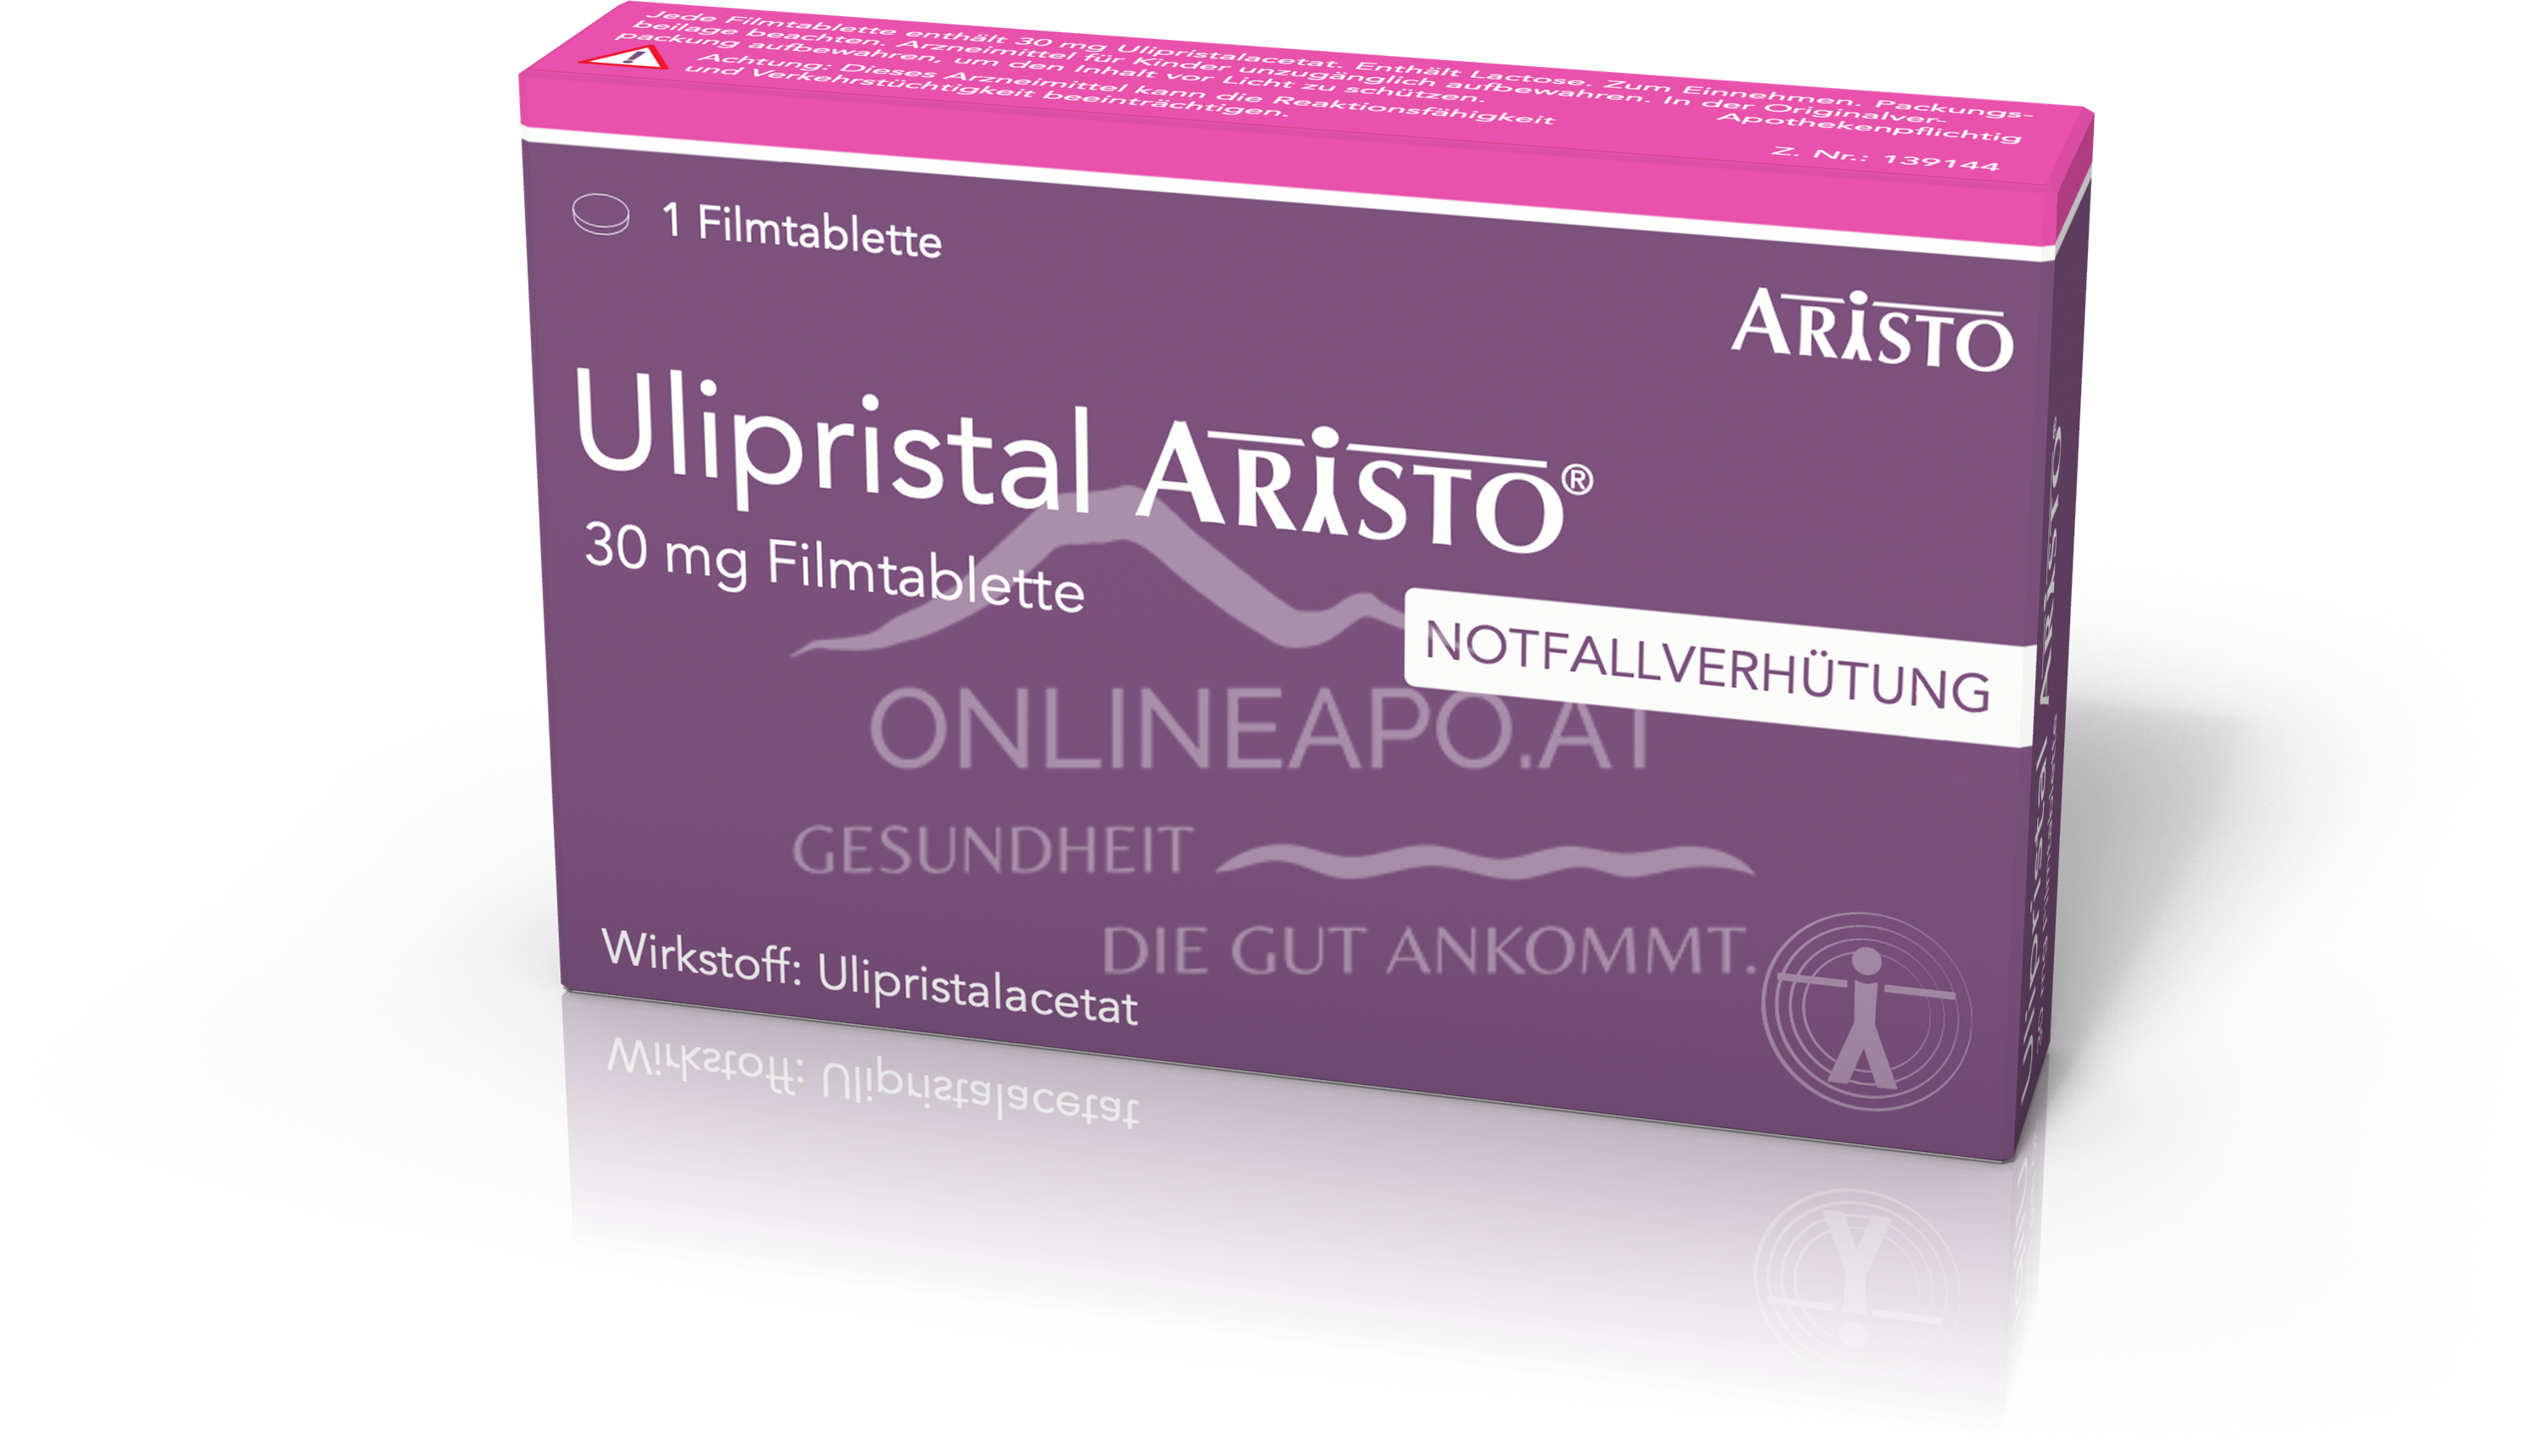 Ulipristal Aristo 30 mg Filmtablette